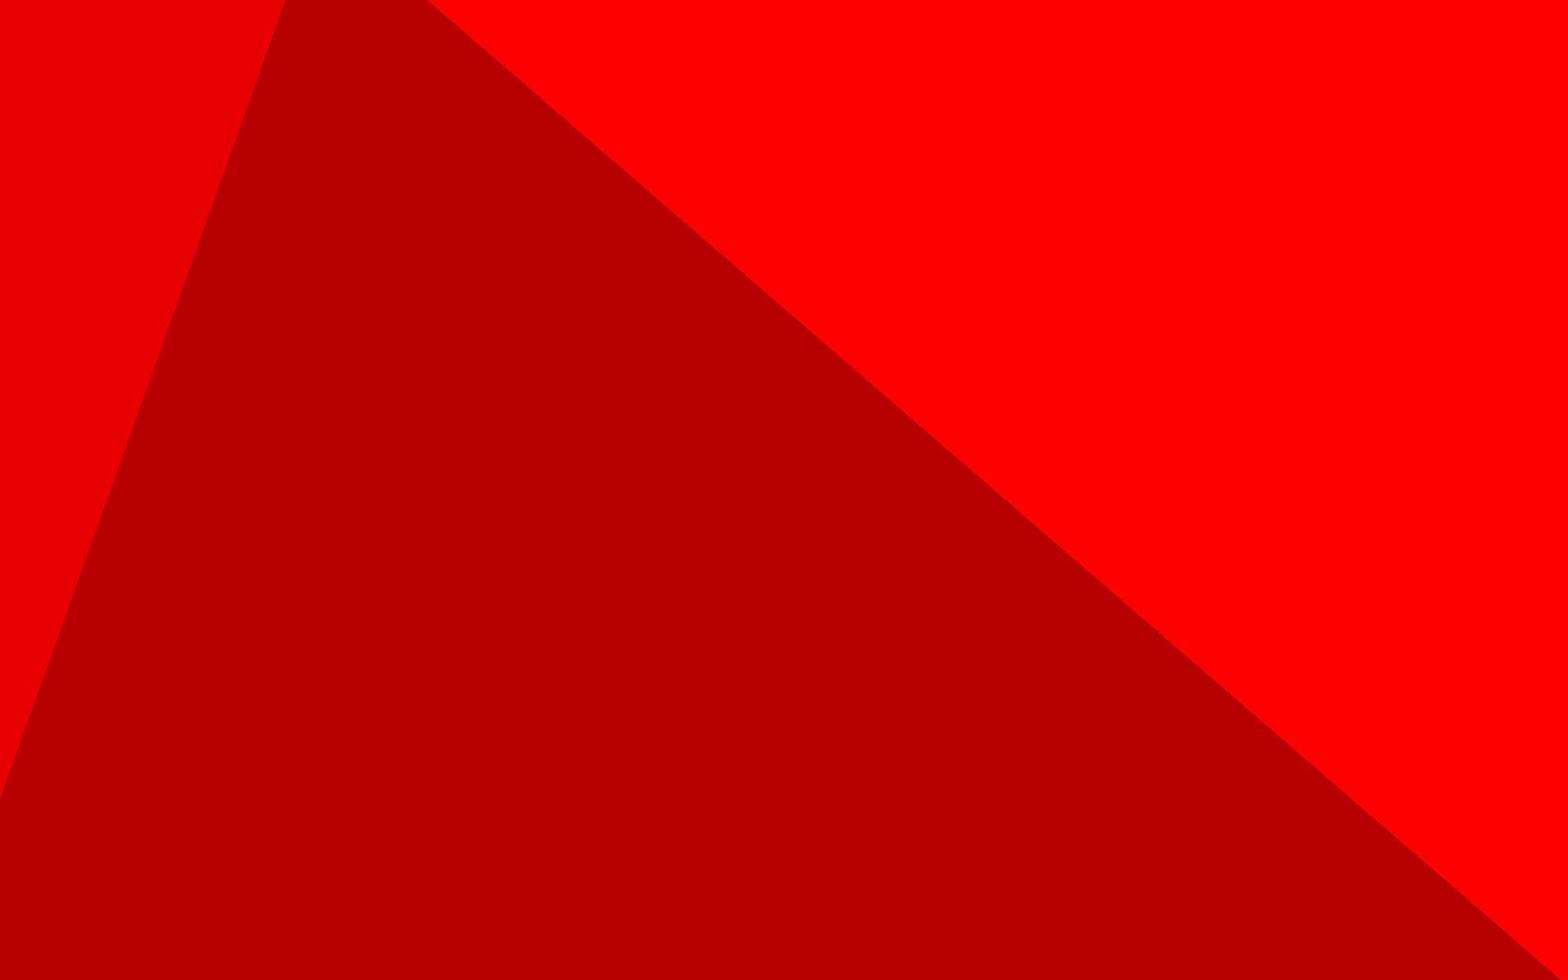 textura de triângulo embaçado vector vermelho claro.